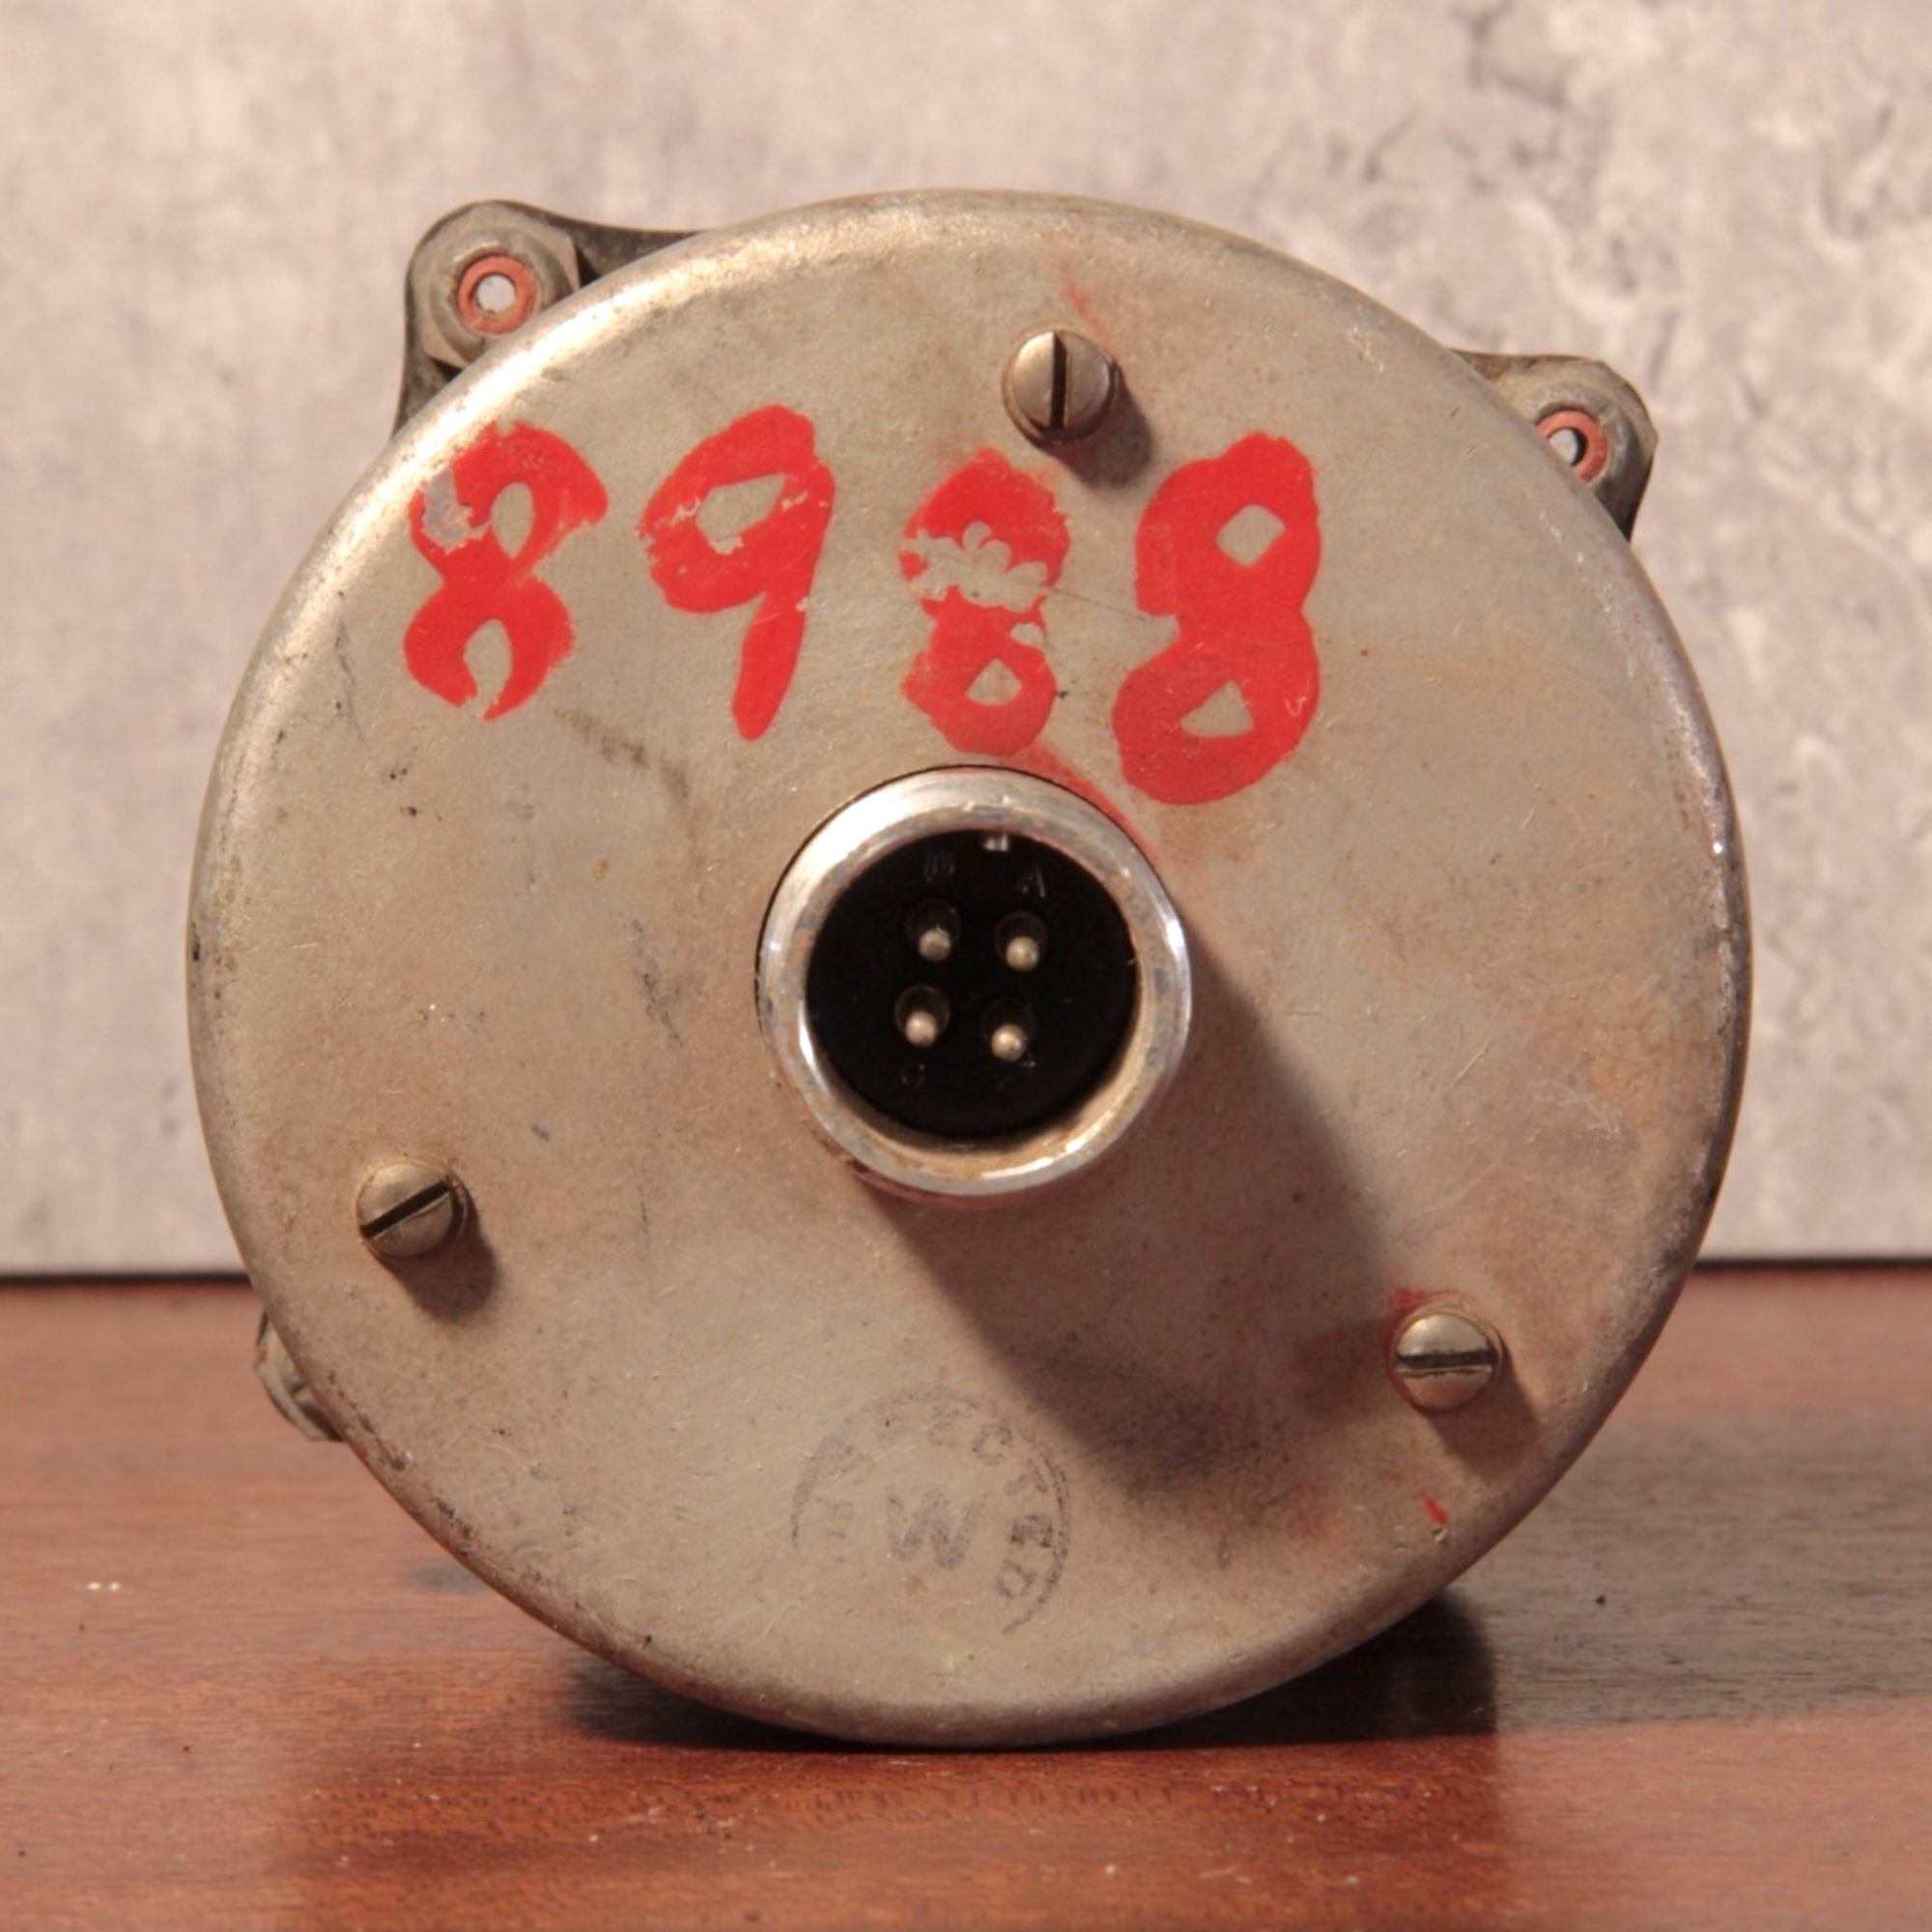 WWII Aircraft Instrument, Engine Cylinder Head Temperature Indicator Type B–11 - 1940s - World War II